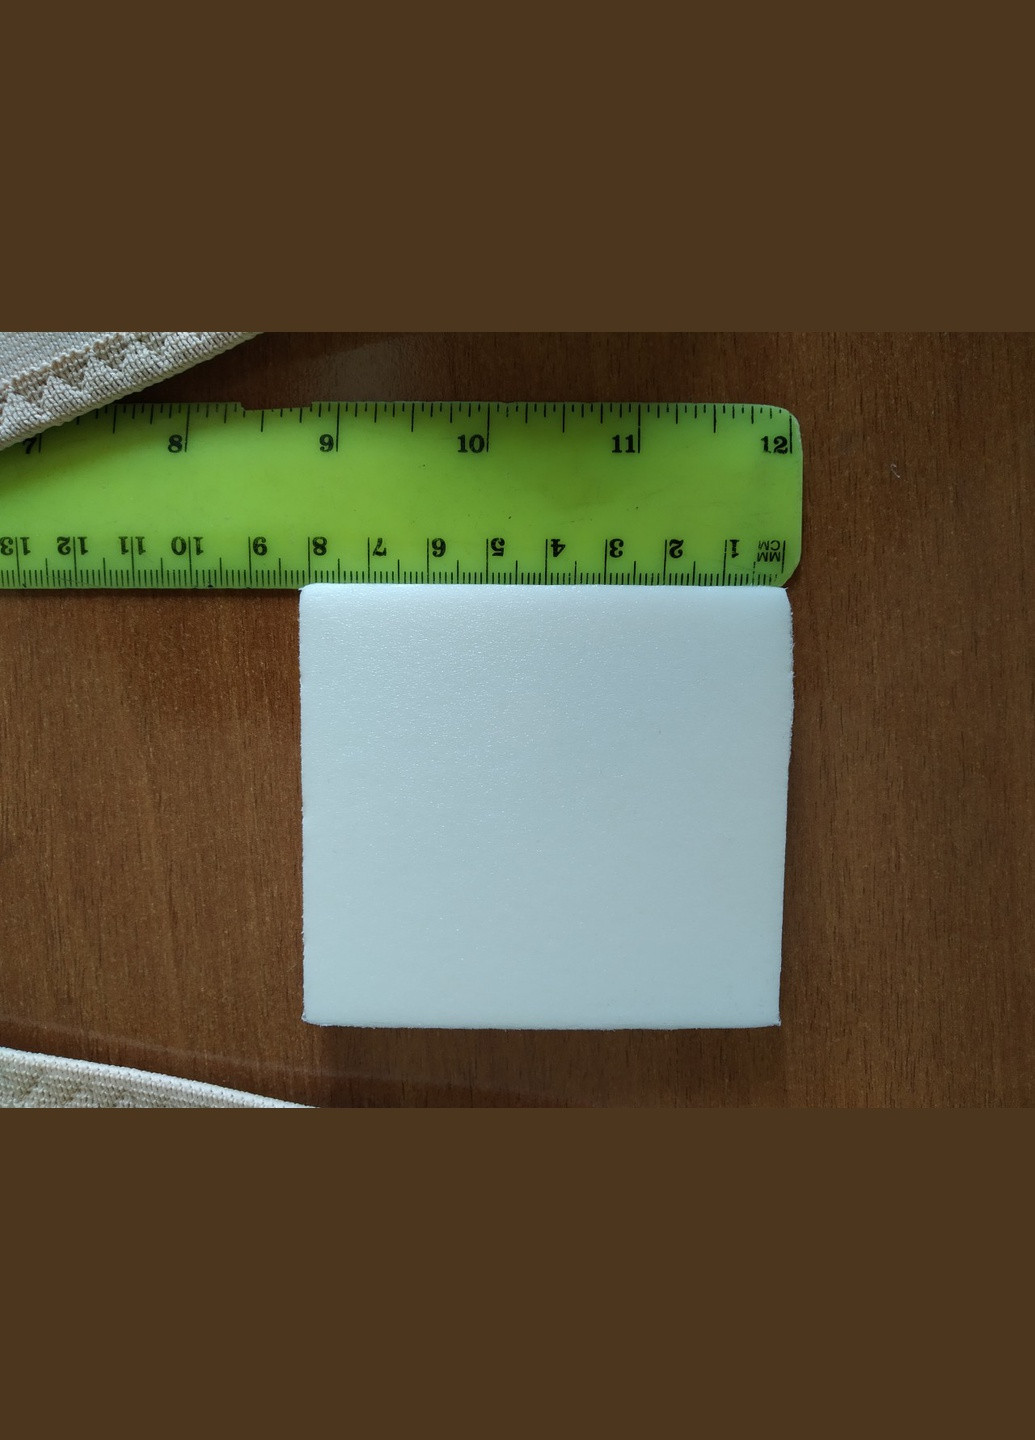 Пупочный грыжевой пояс бандаж медицинский эластичный грыжевый для пупочной грыжи ВIТАЛI размер № (2947) Віталі (264209207)